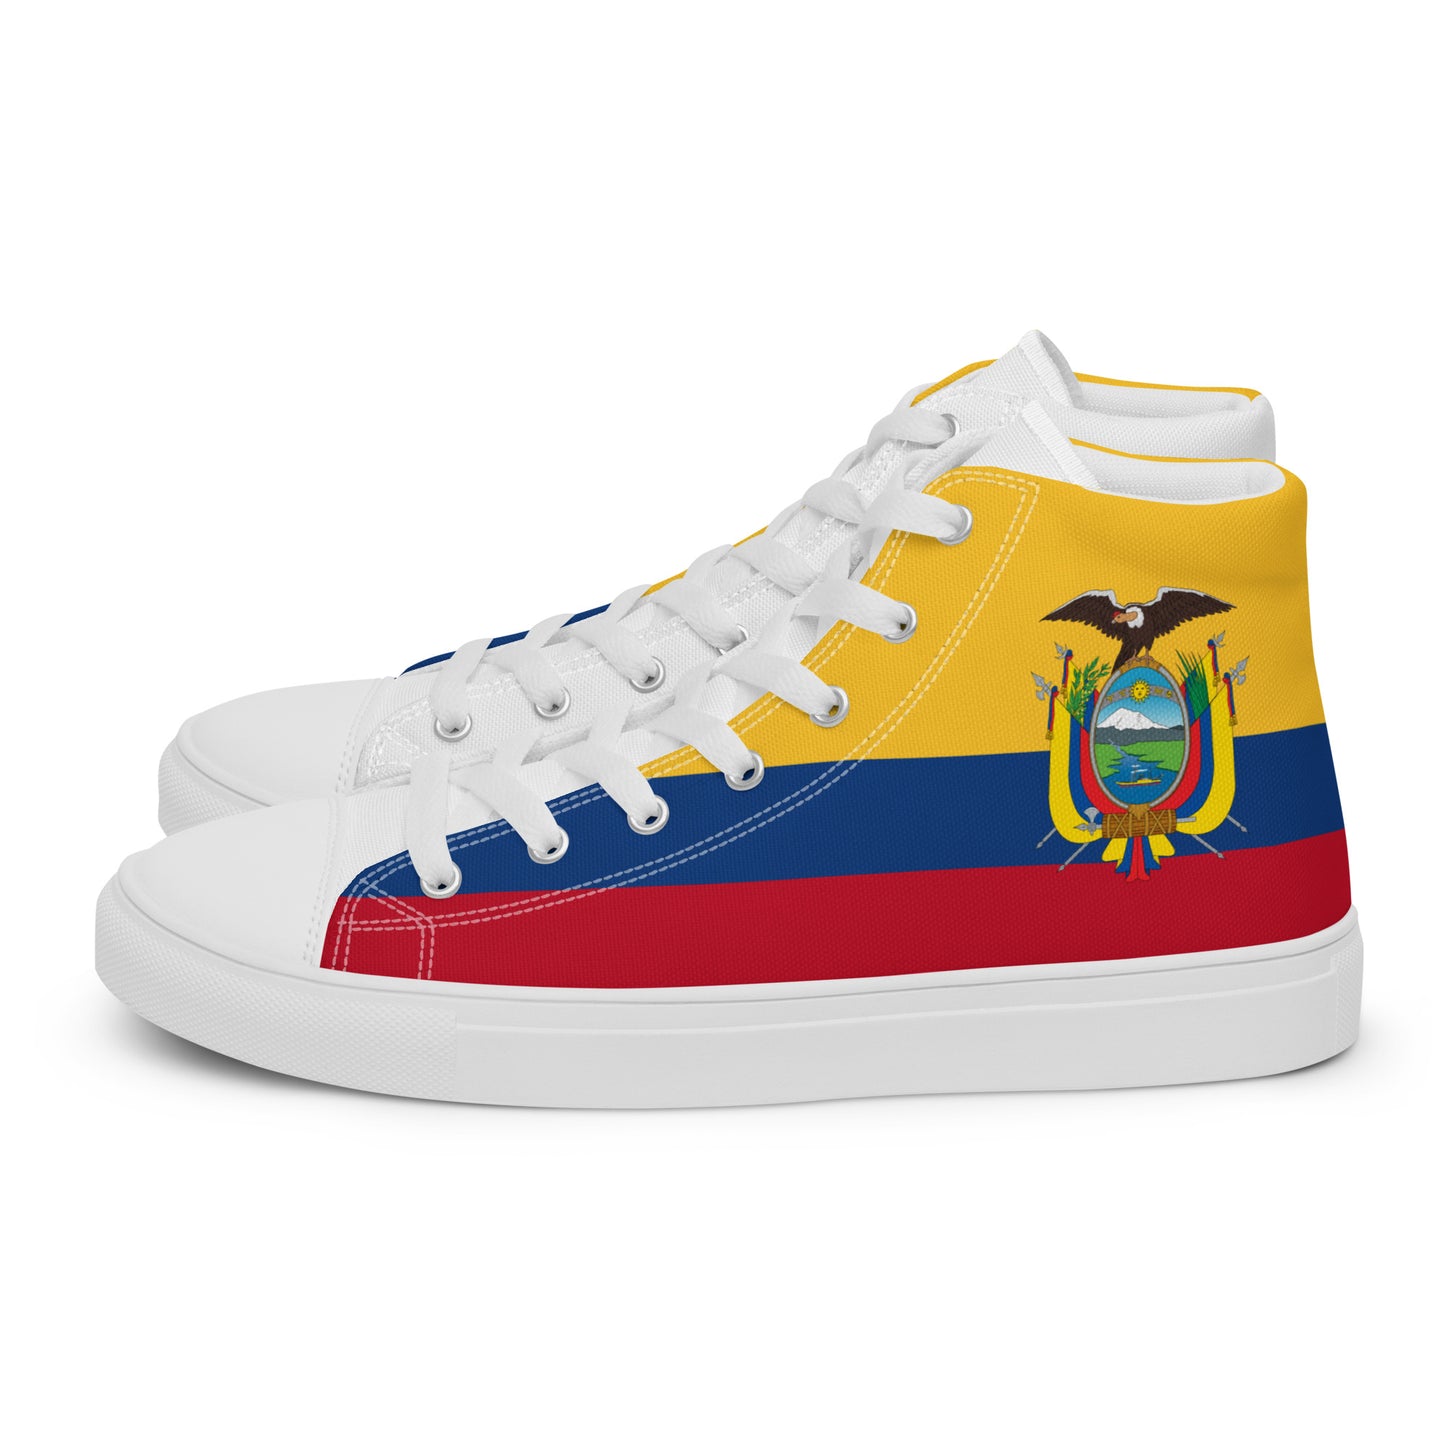 Ecuador - Mujer - Bandera - Zapatos High top